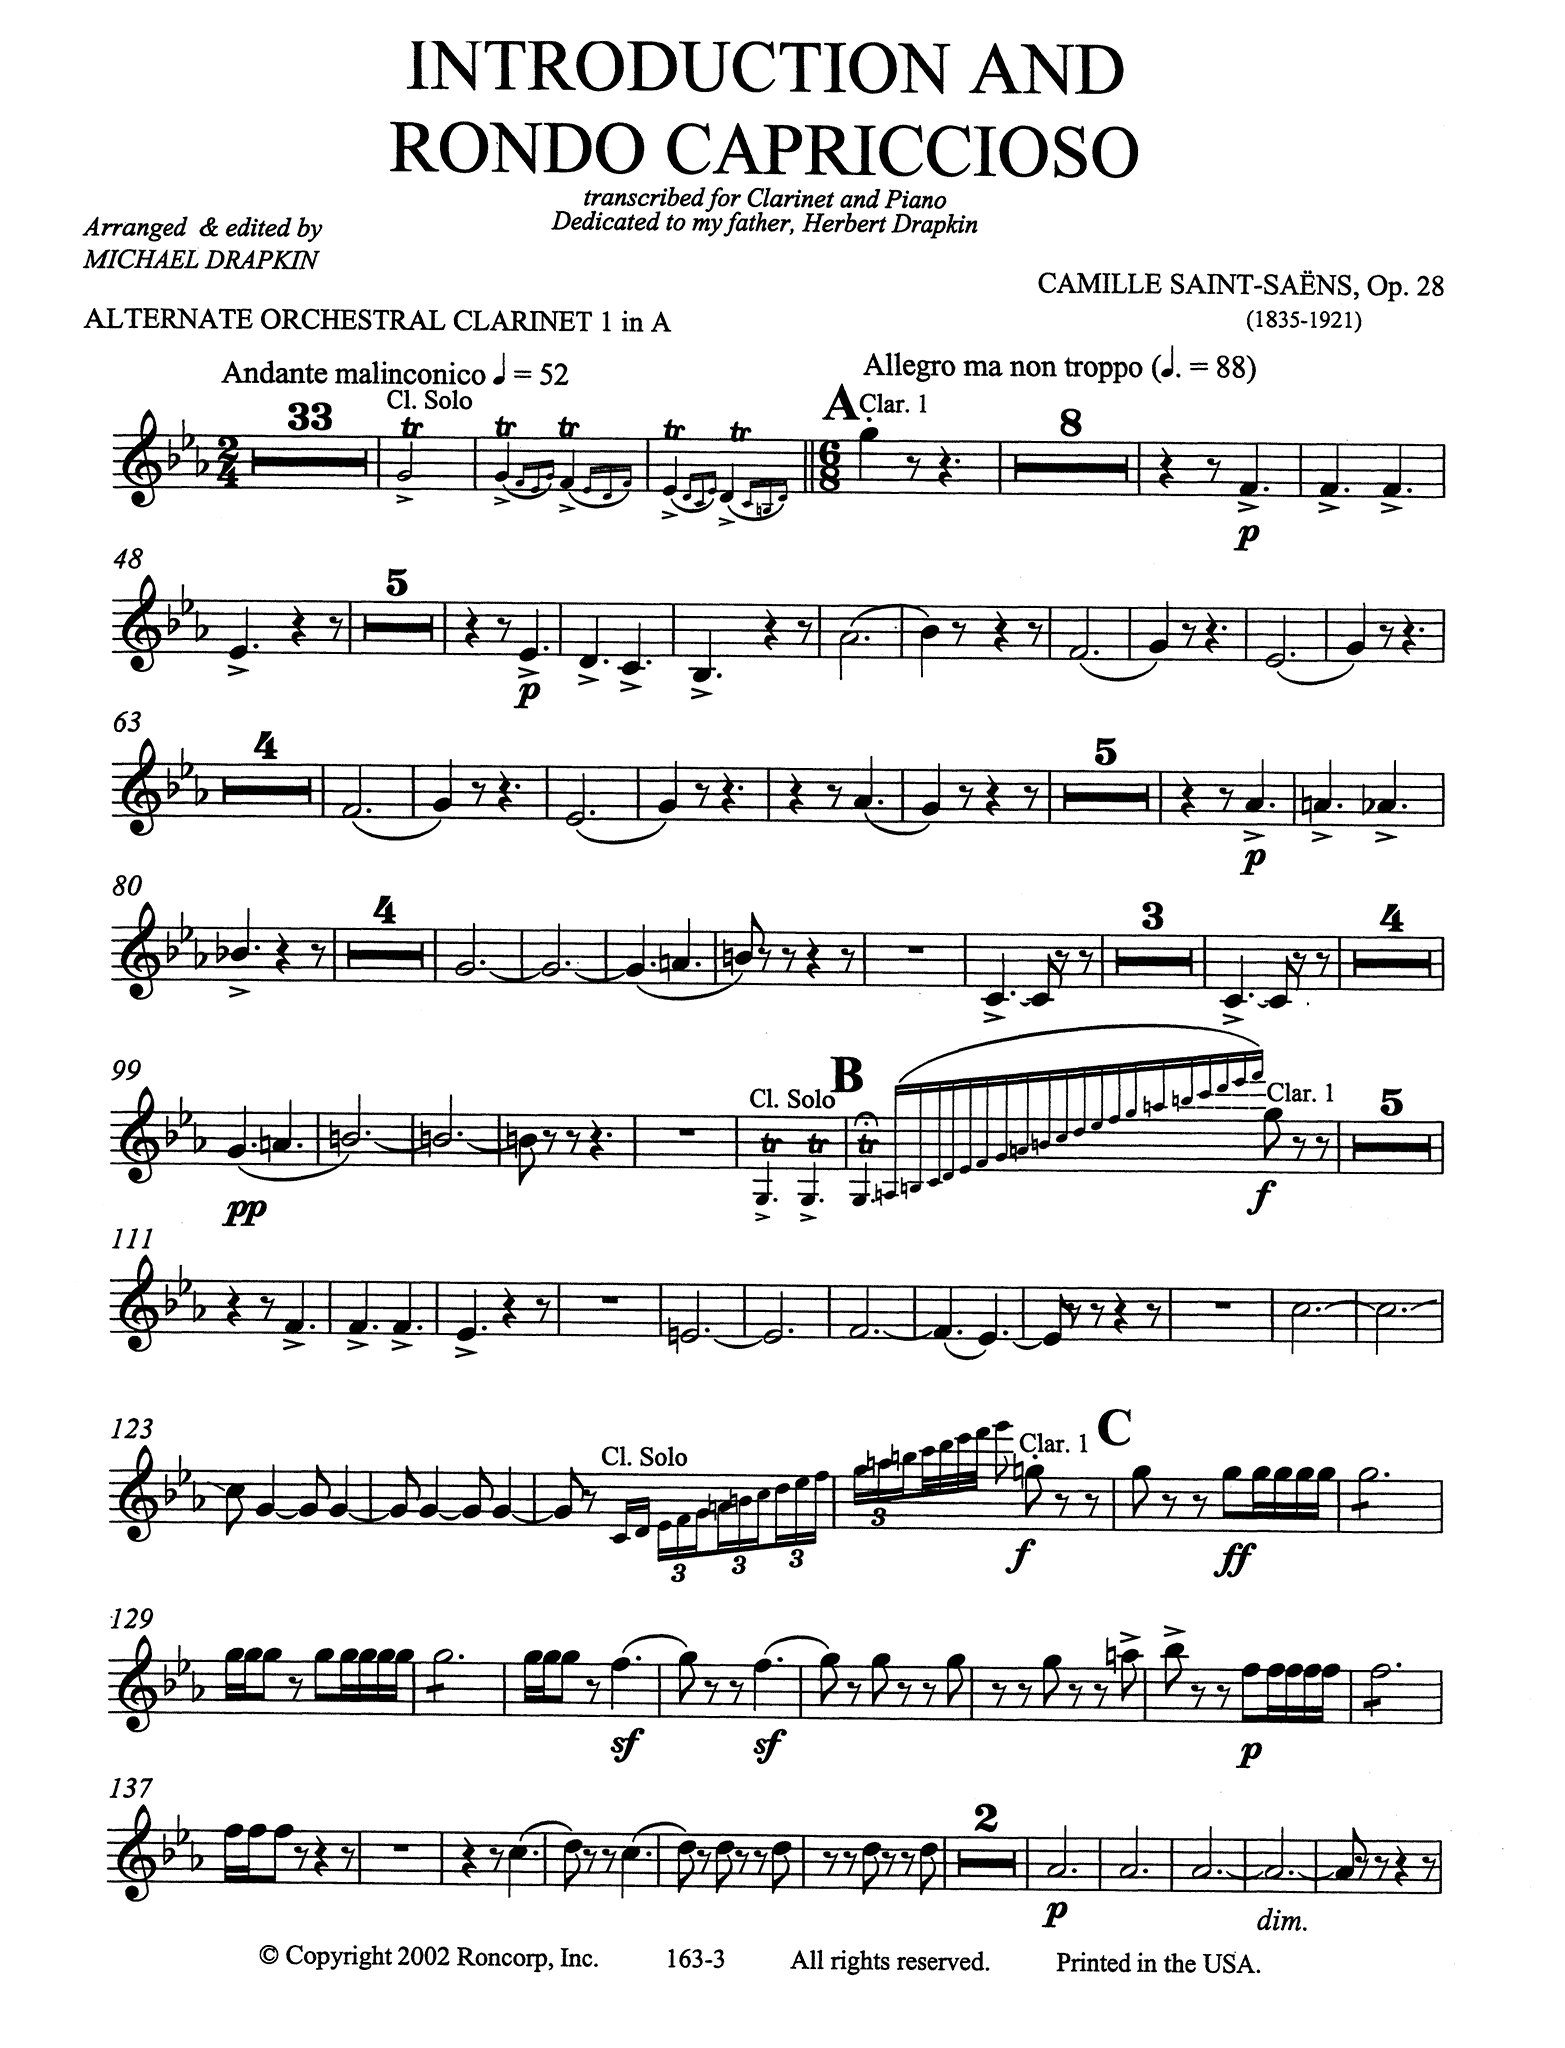 Saint-Saëns Introduction et rondo capriccioso, Op. 28 clarinet arrangement first clarinet orchestra part